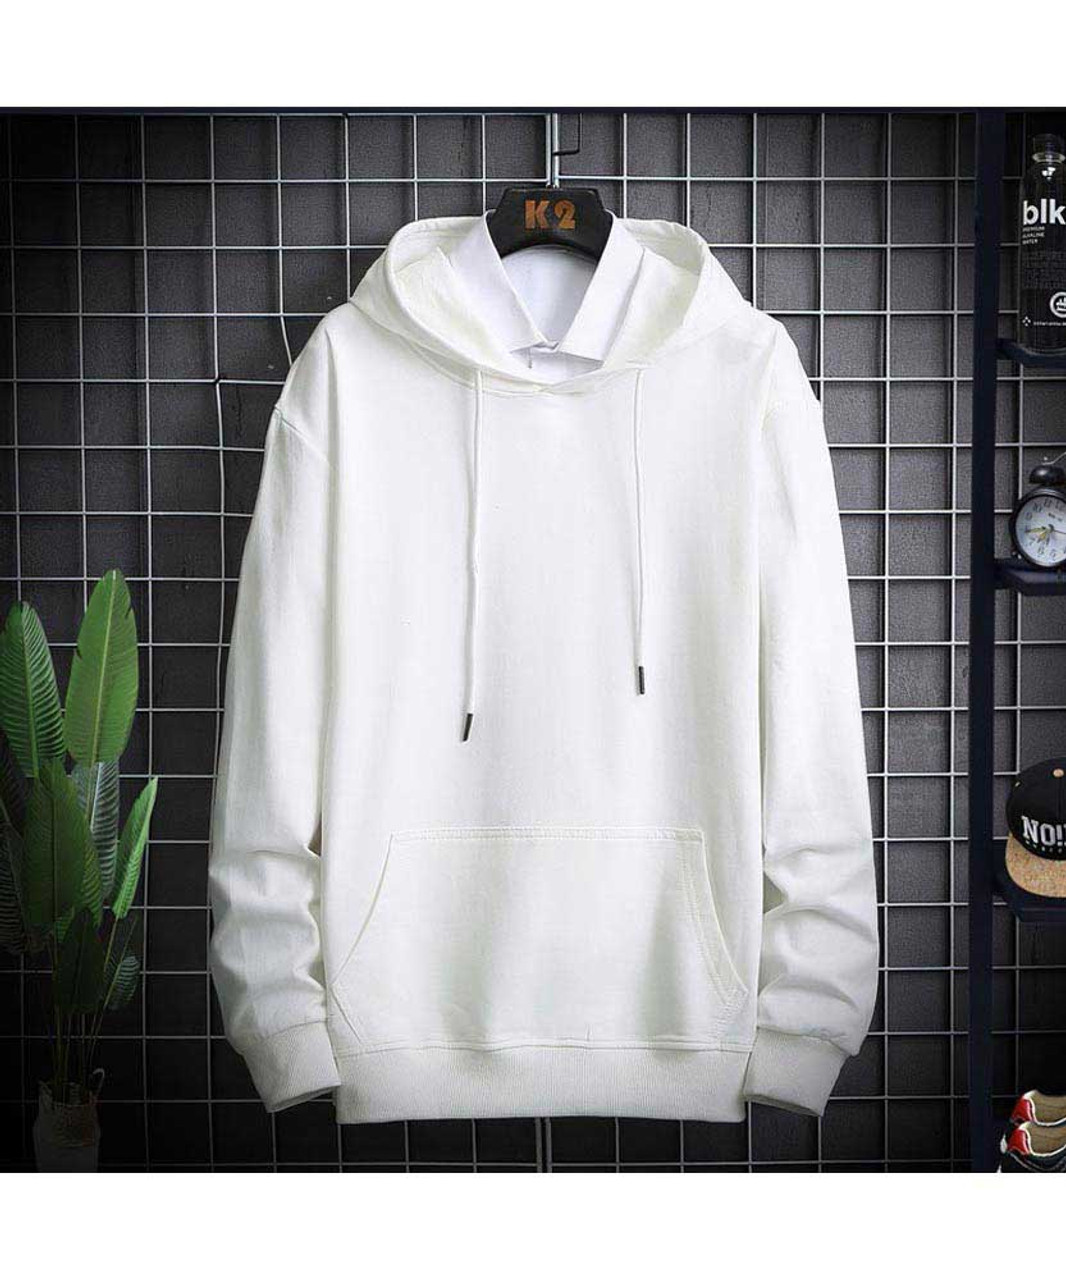 White simple plain color pull over hoodies | Mens hoodies online 1575MCLO